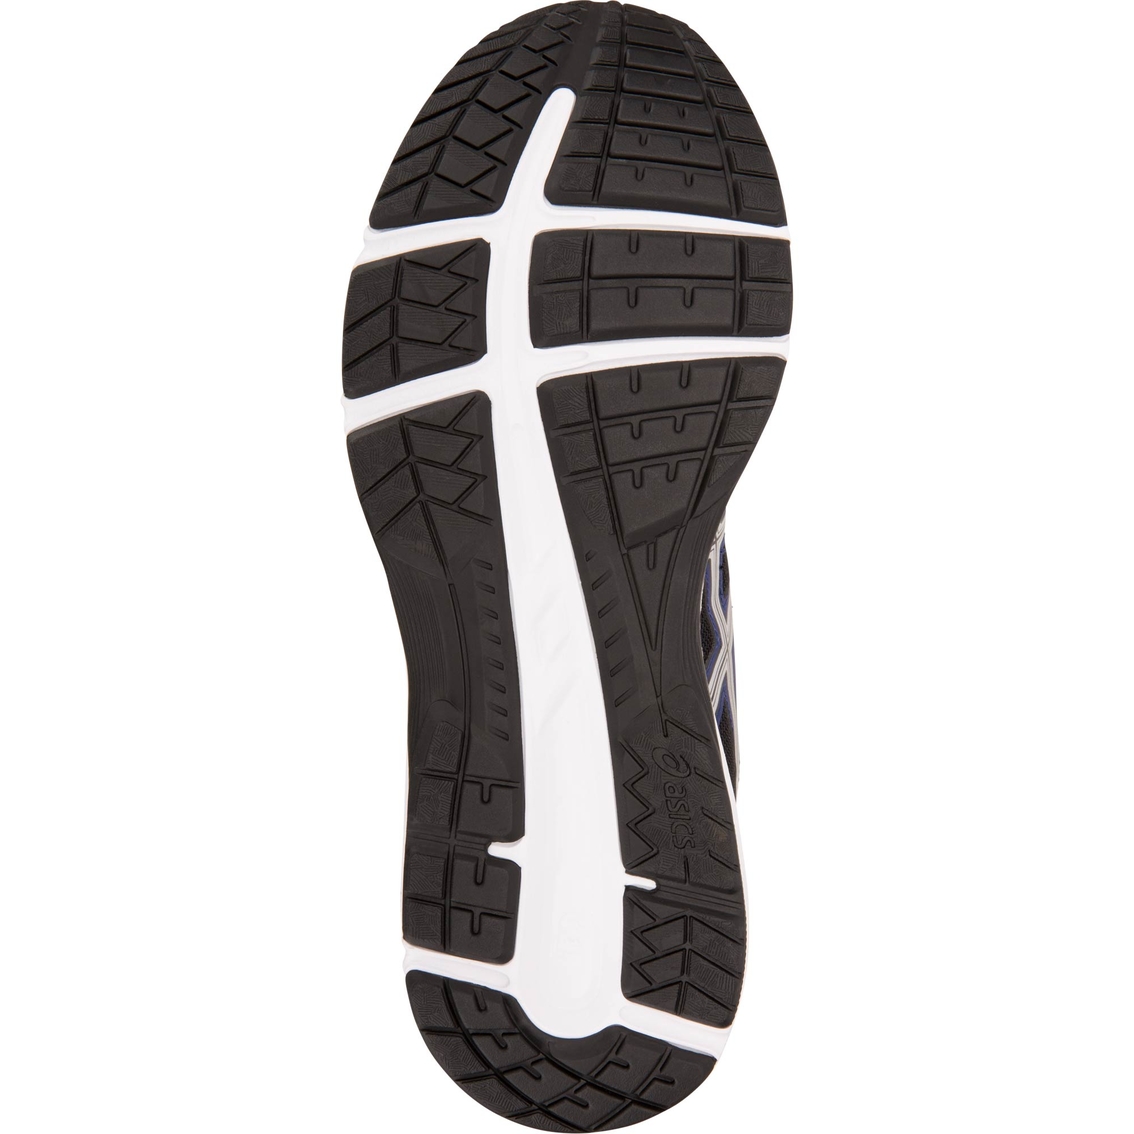 Asics Men's Gel Contend 5 Running Shoes - Image 5 of 5